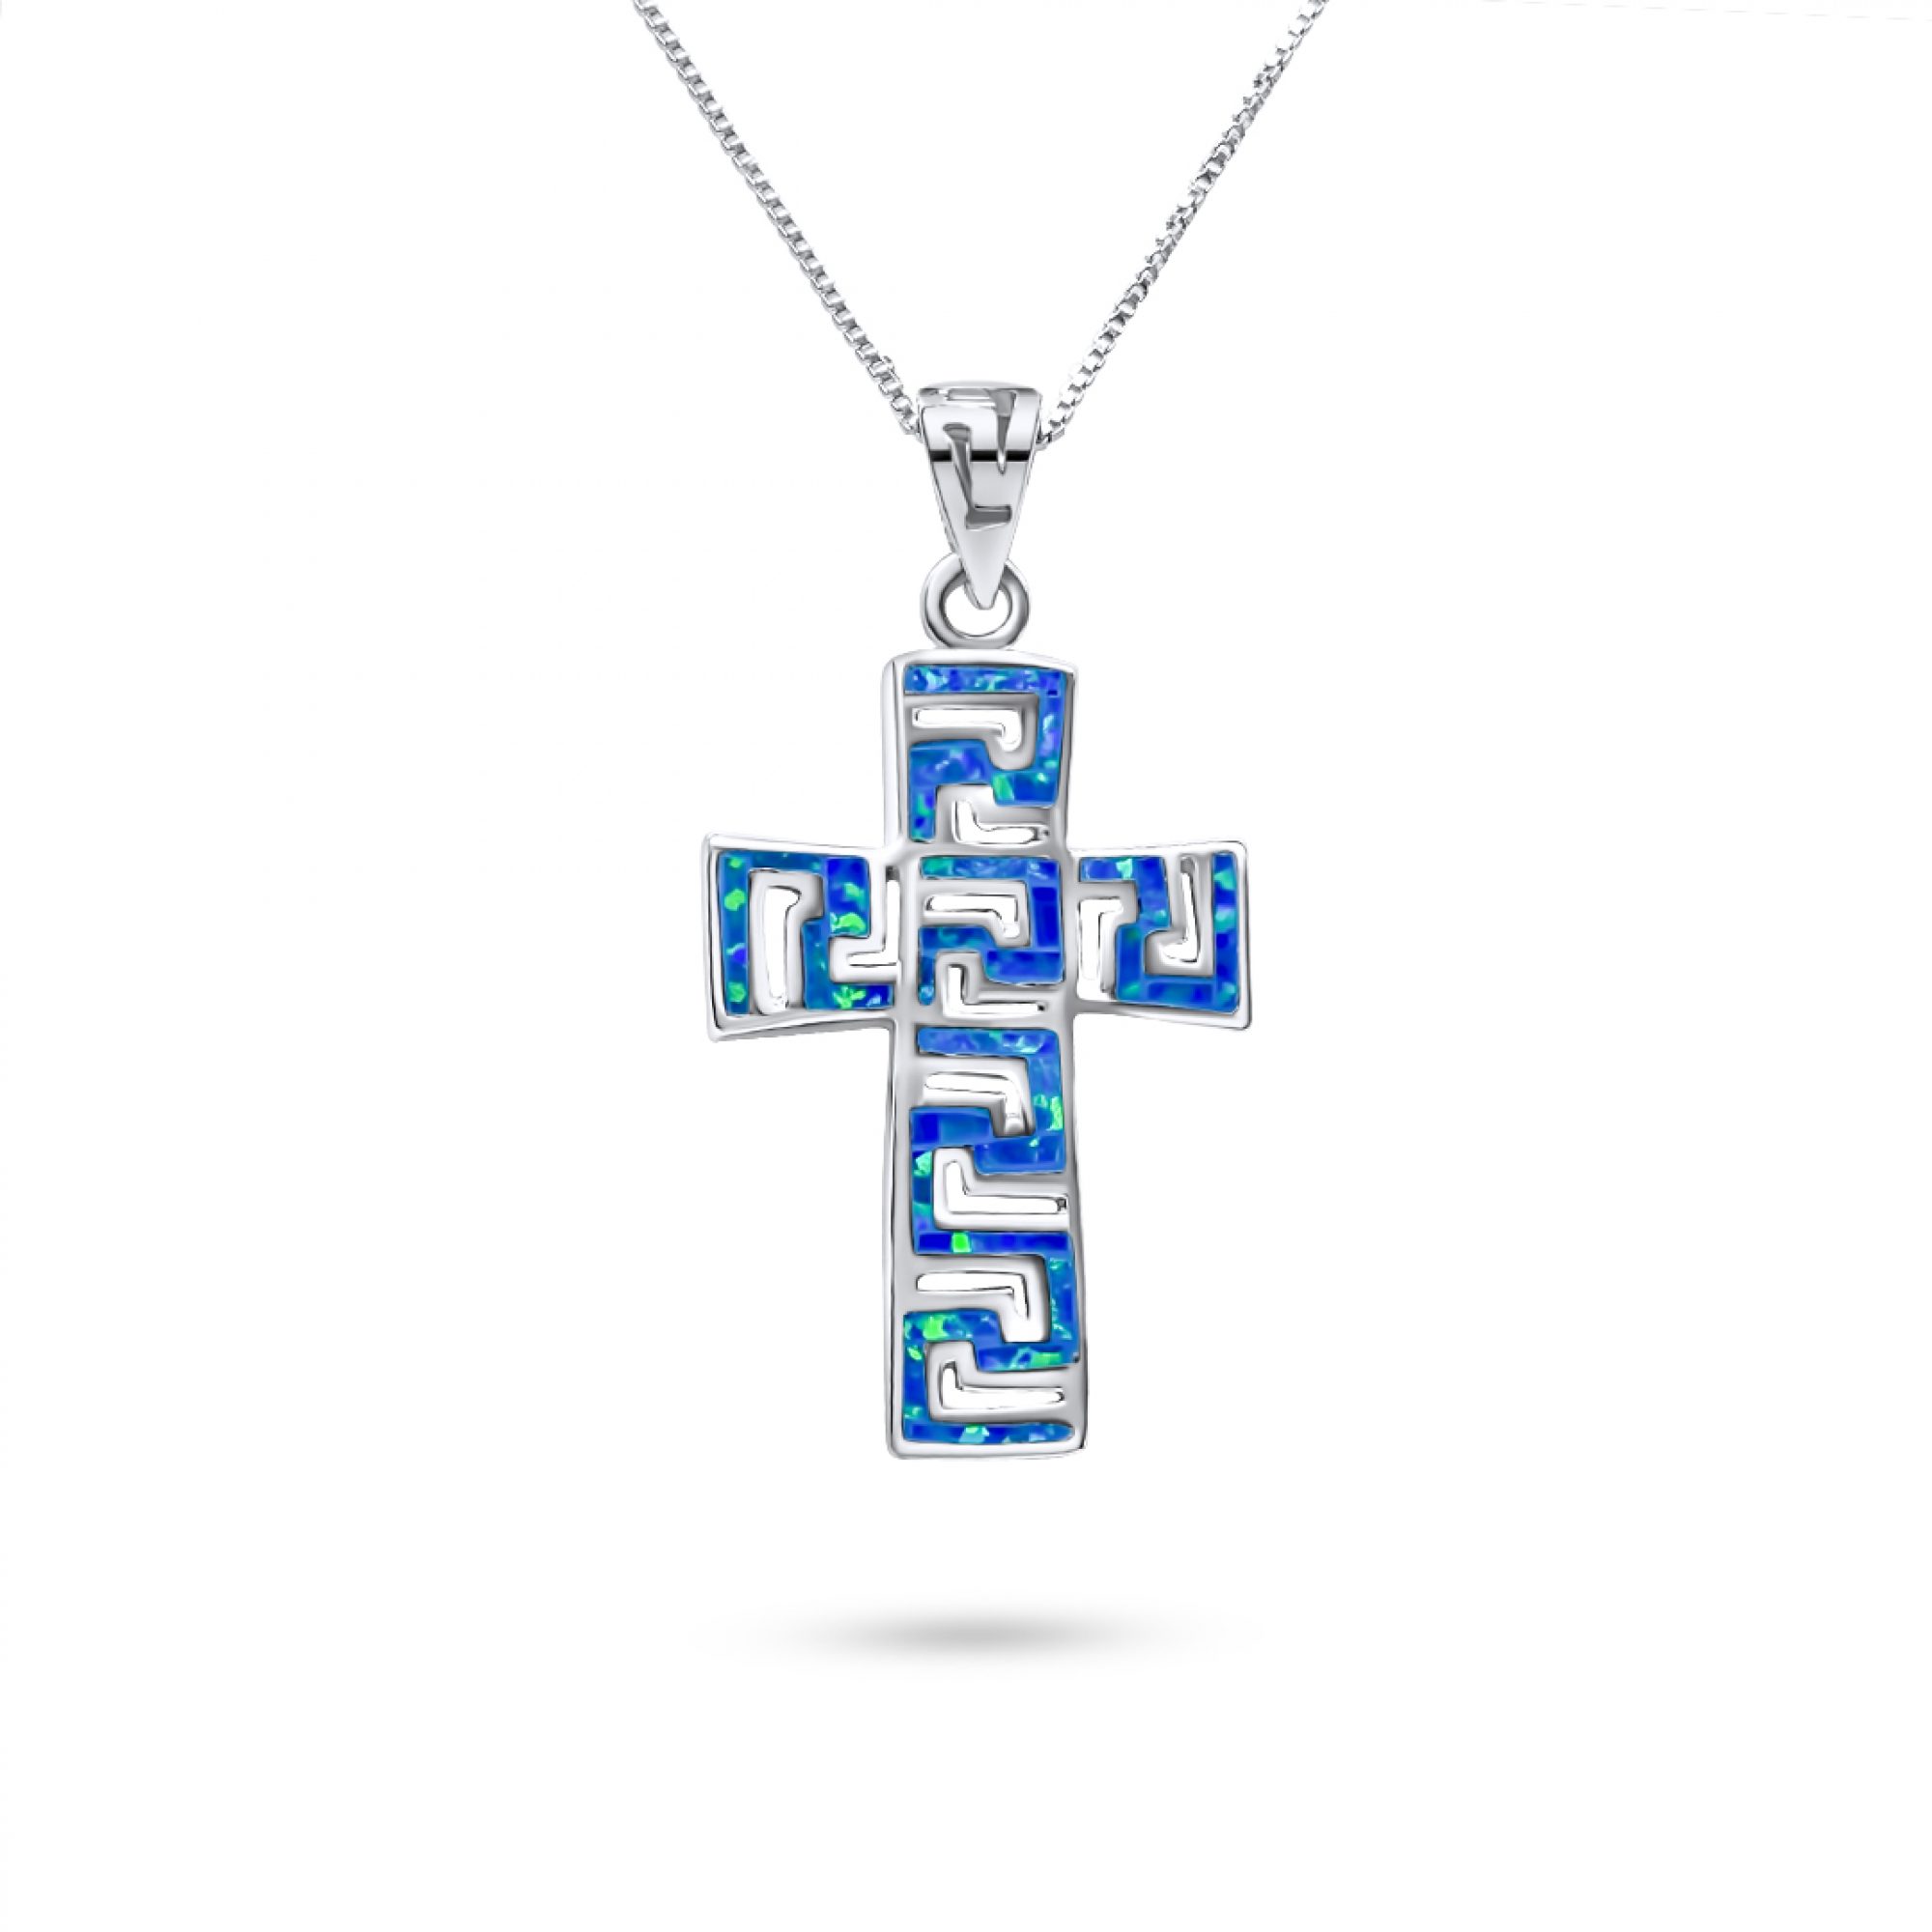 Opal cross pendant